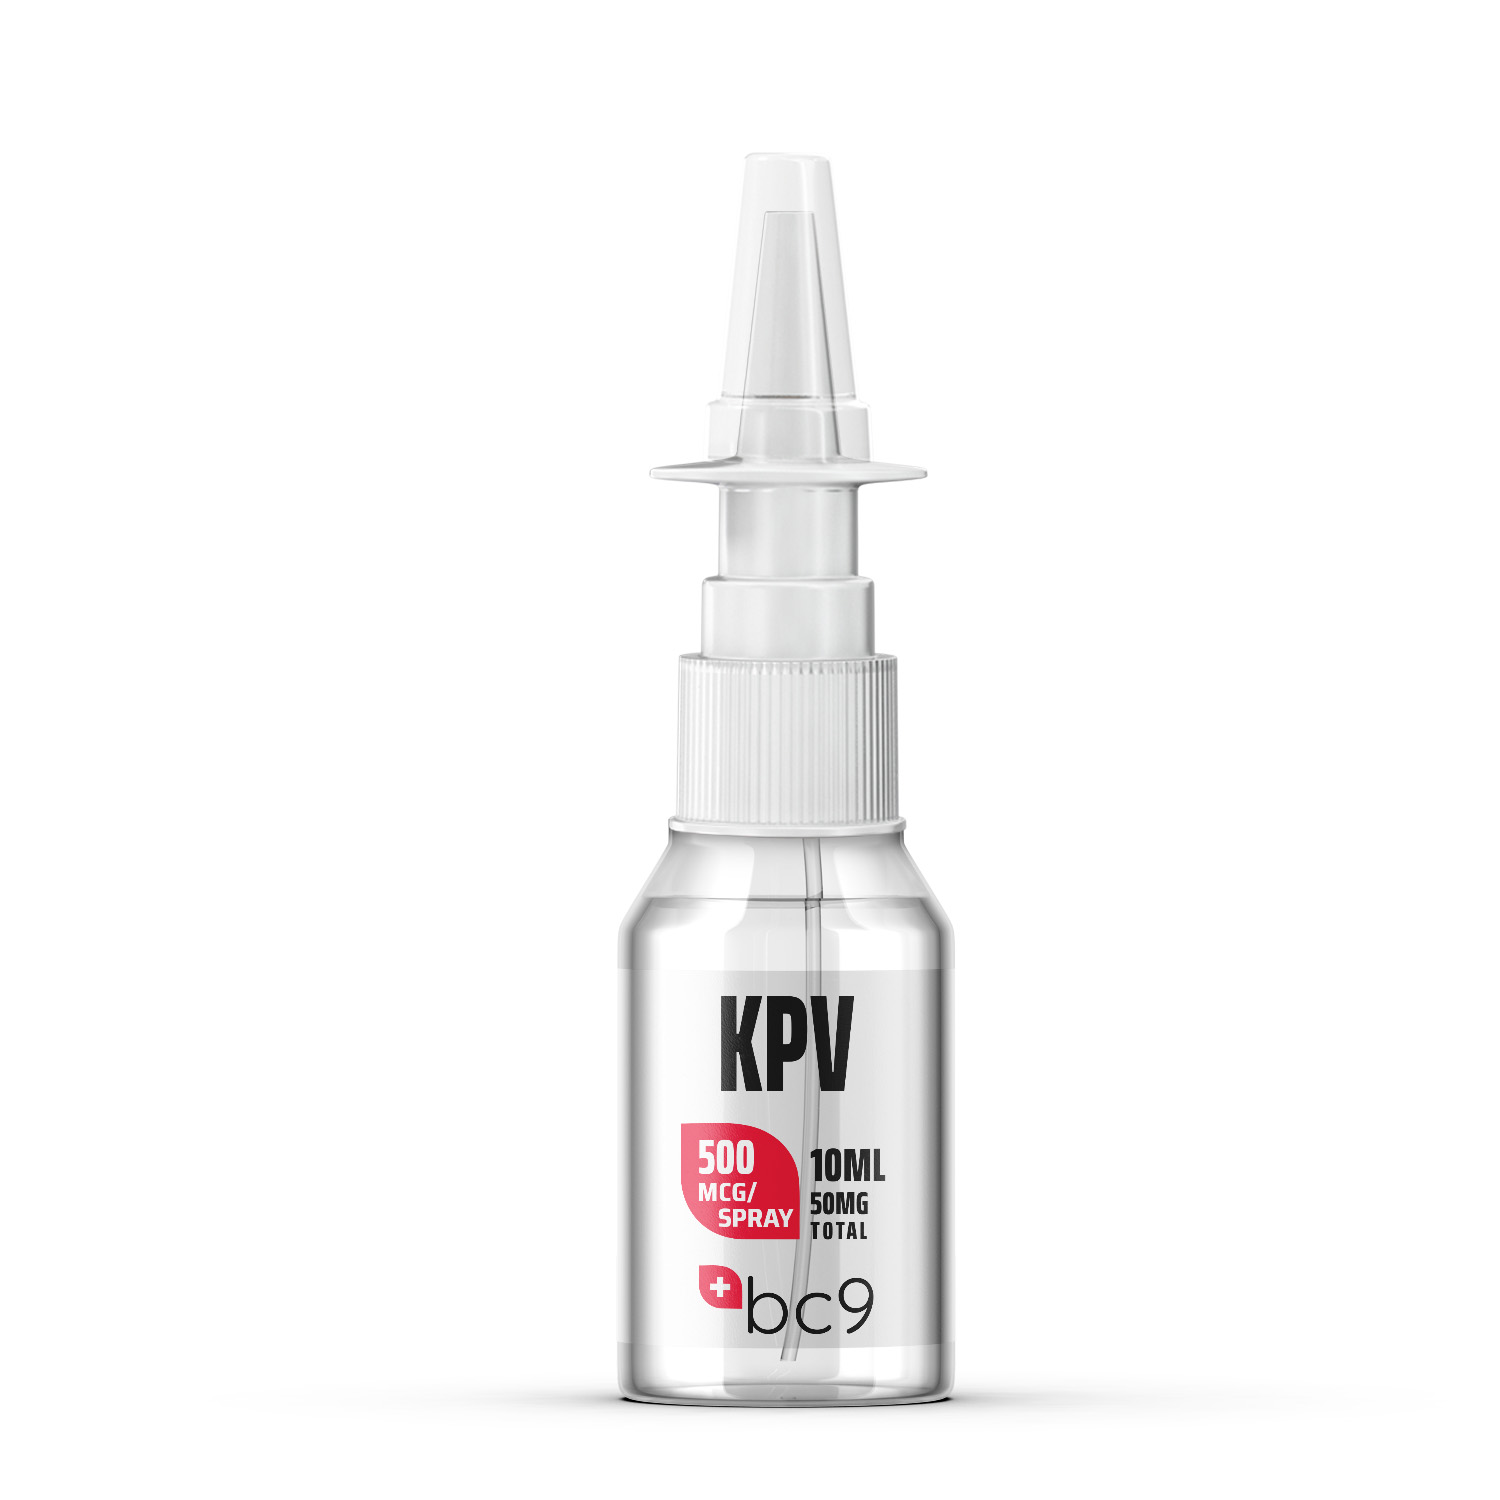 KPV (Lysine-Proline-Valine) Nasal Spray For Sale | BC9.org